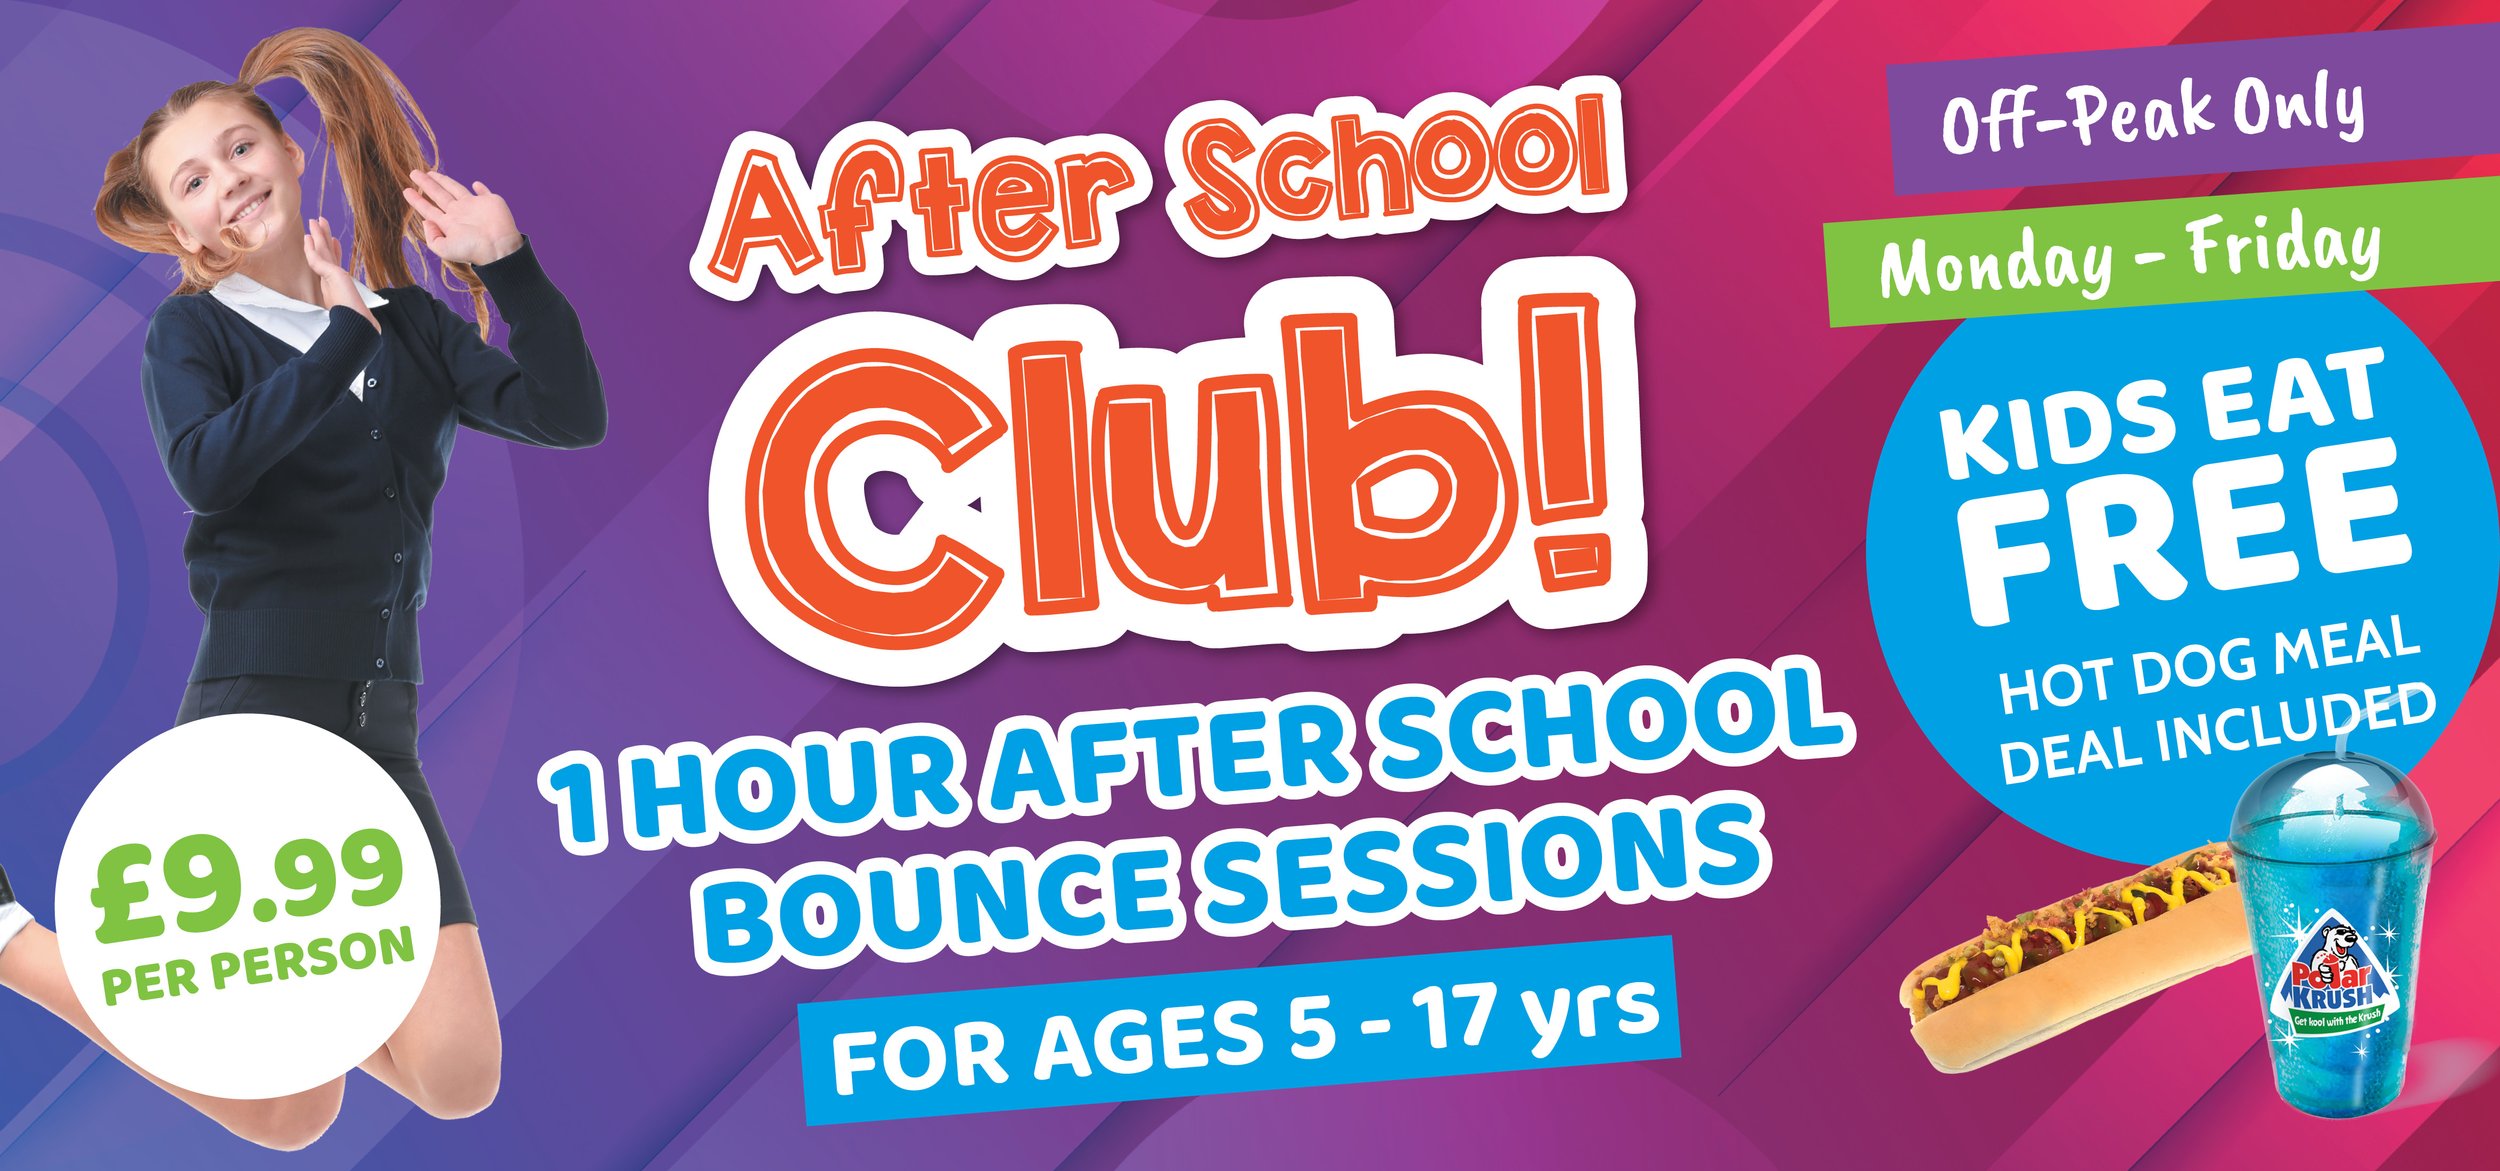 After School Club - Website Banners.jpg